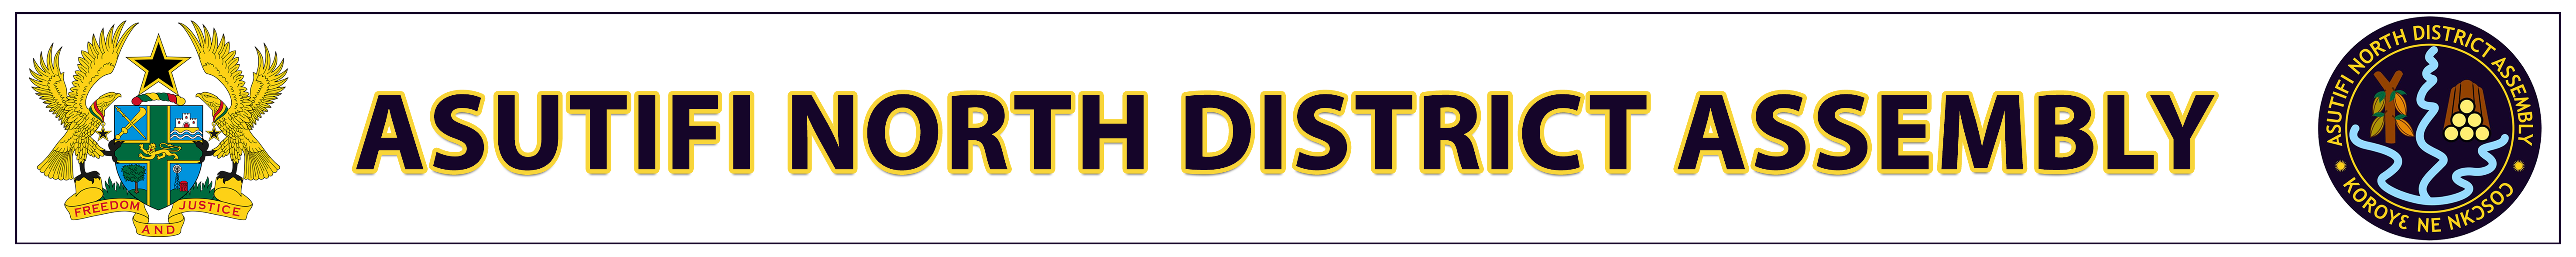 Asutifi North District Assembly Logo